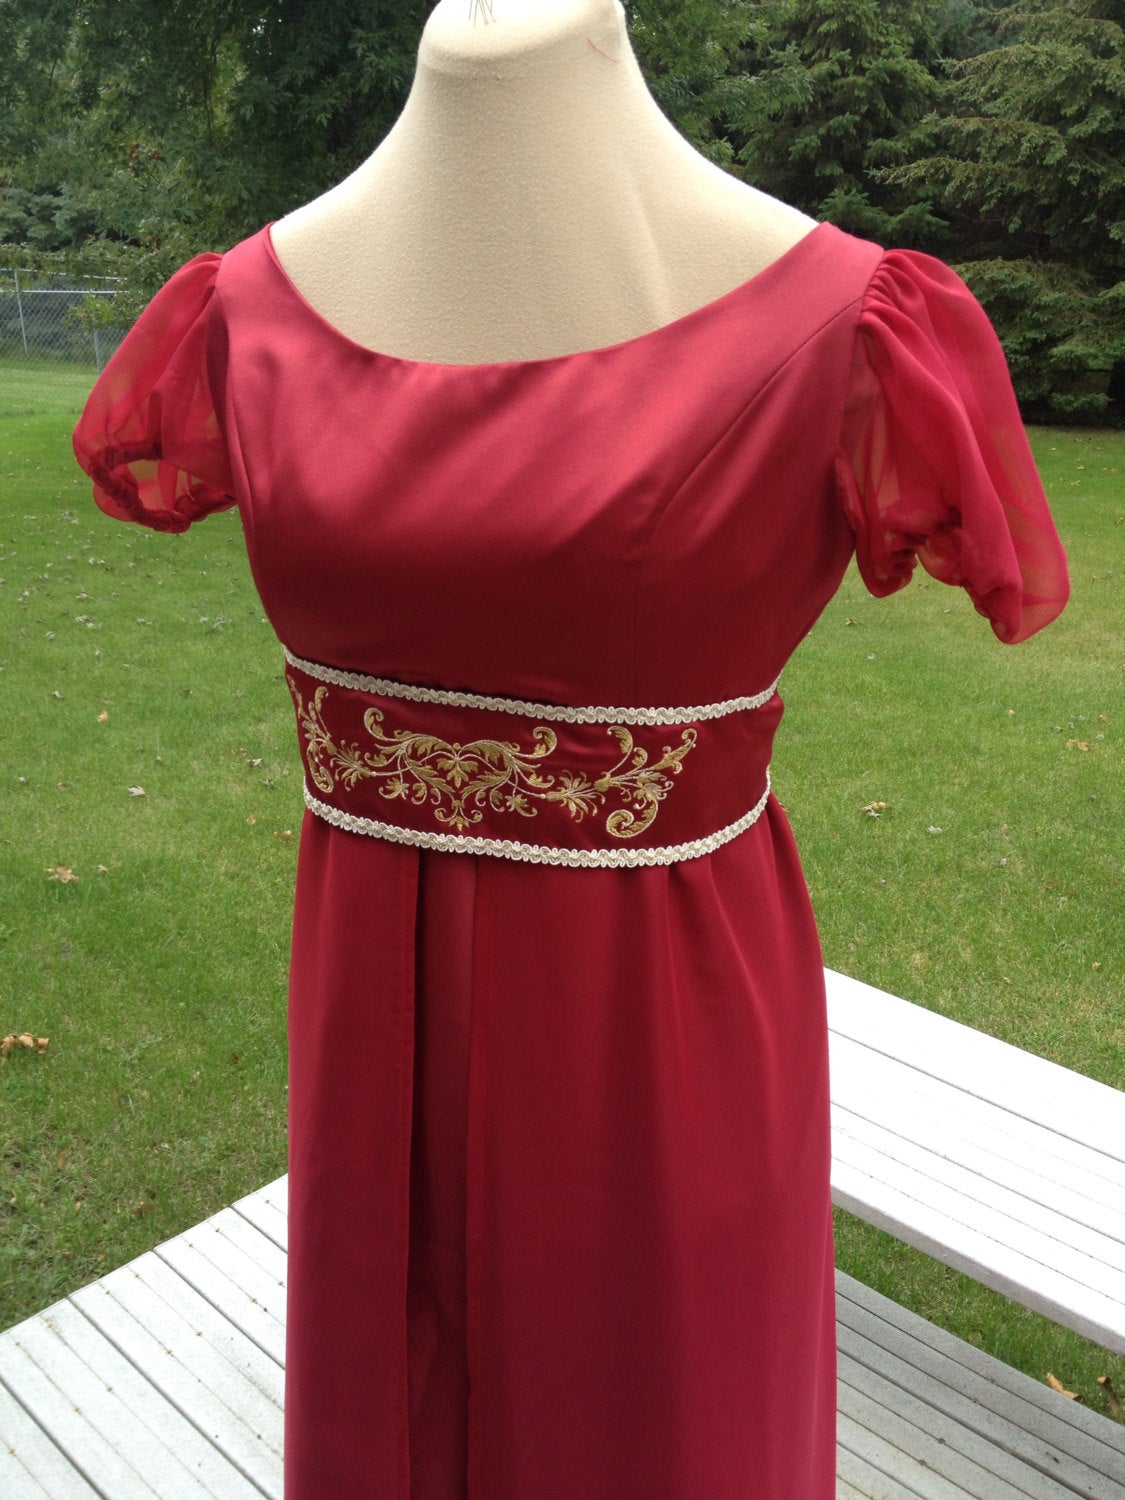 CUSTOM Regency Jane Austen Embroidered Gown Dress